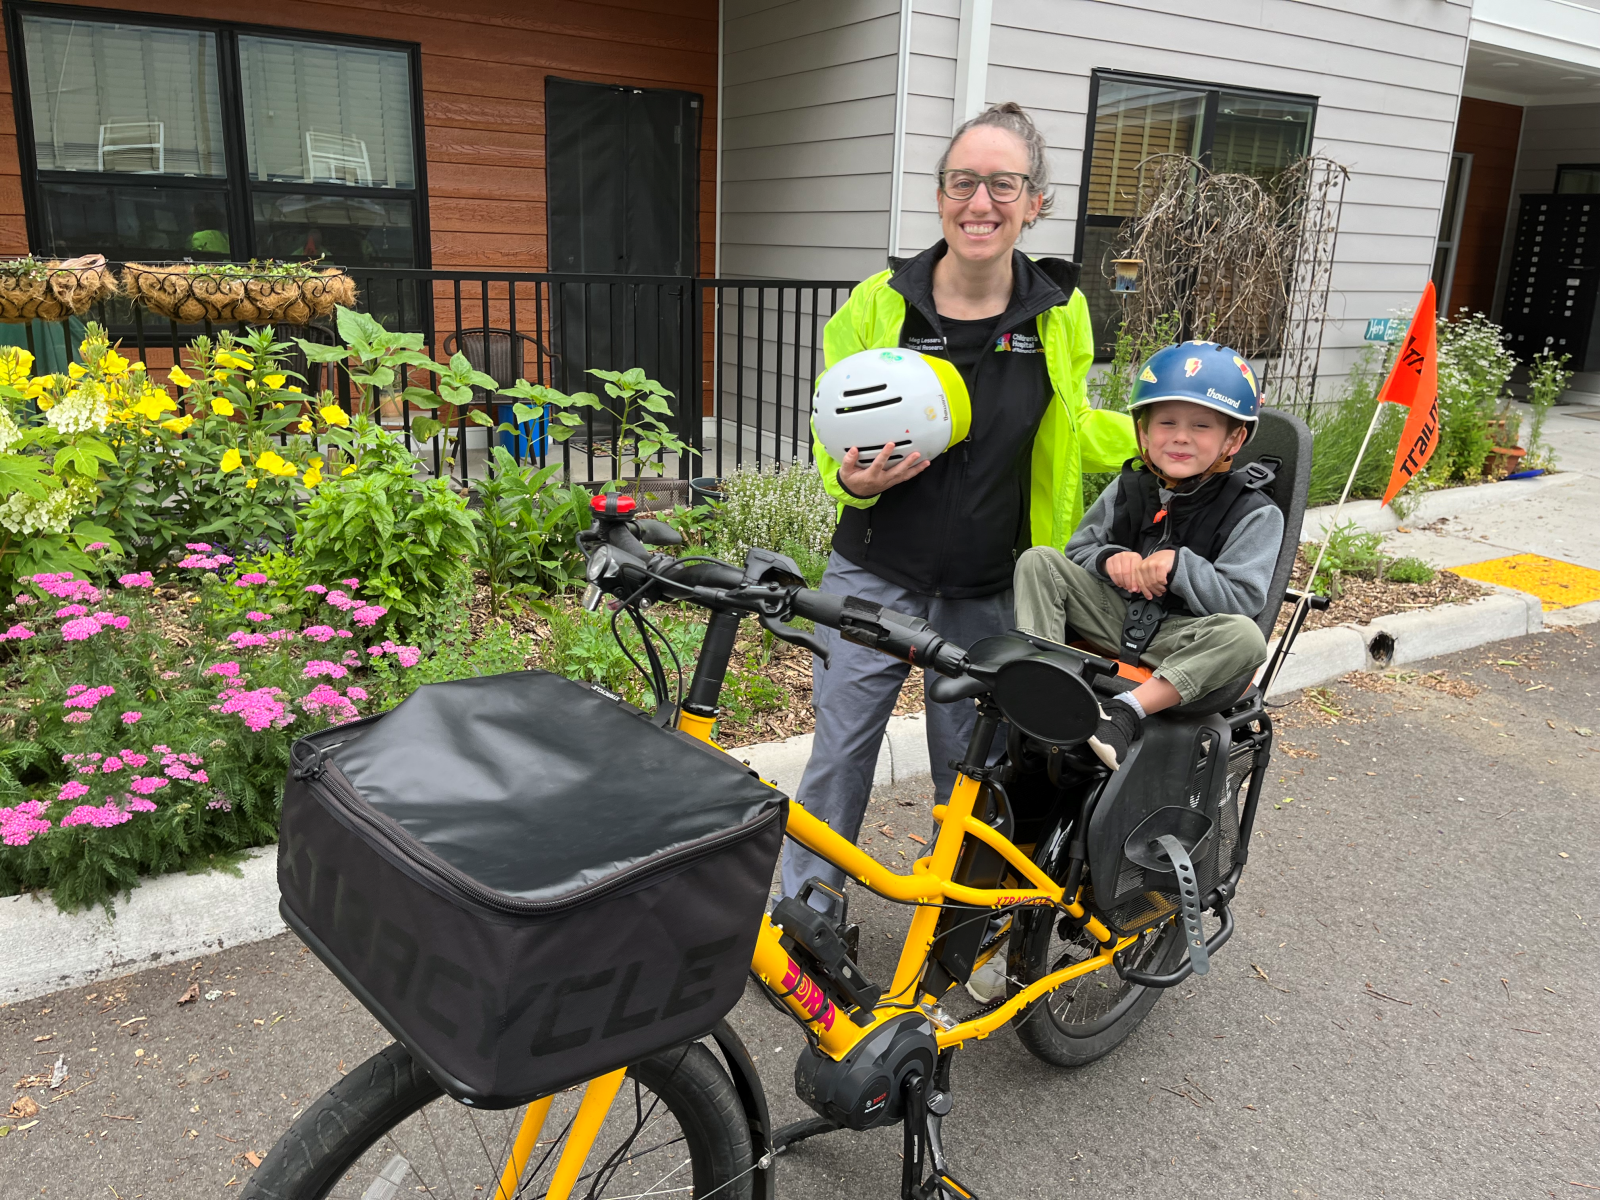 CHoR researcher Meg Lessard and her son on their bike